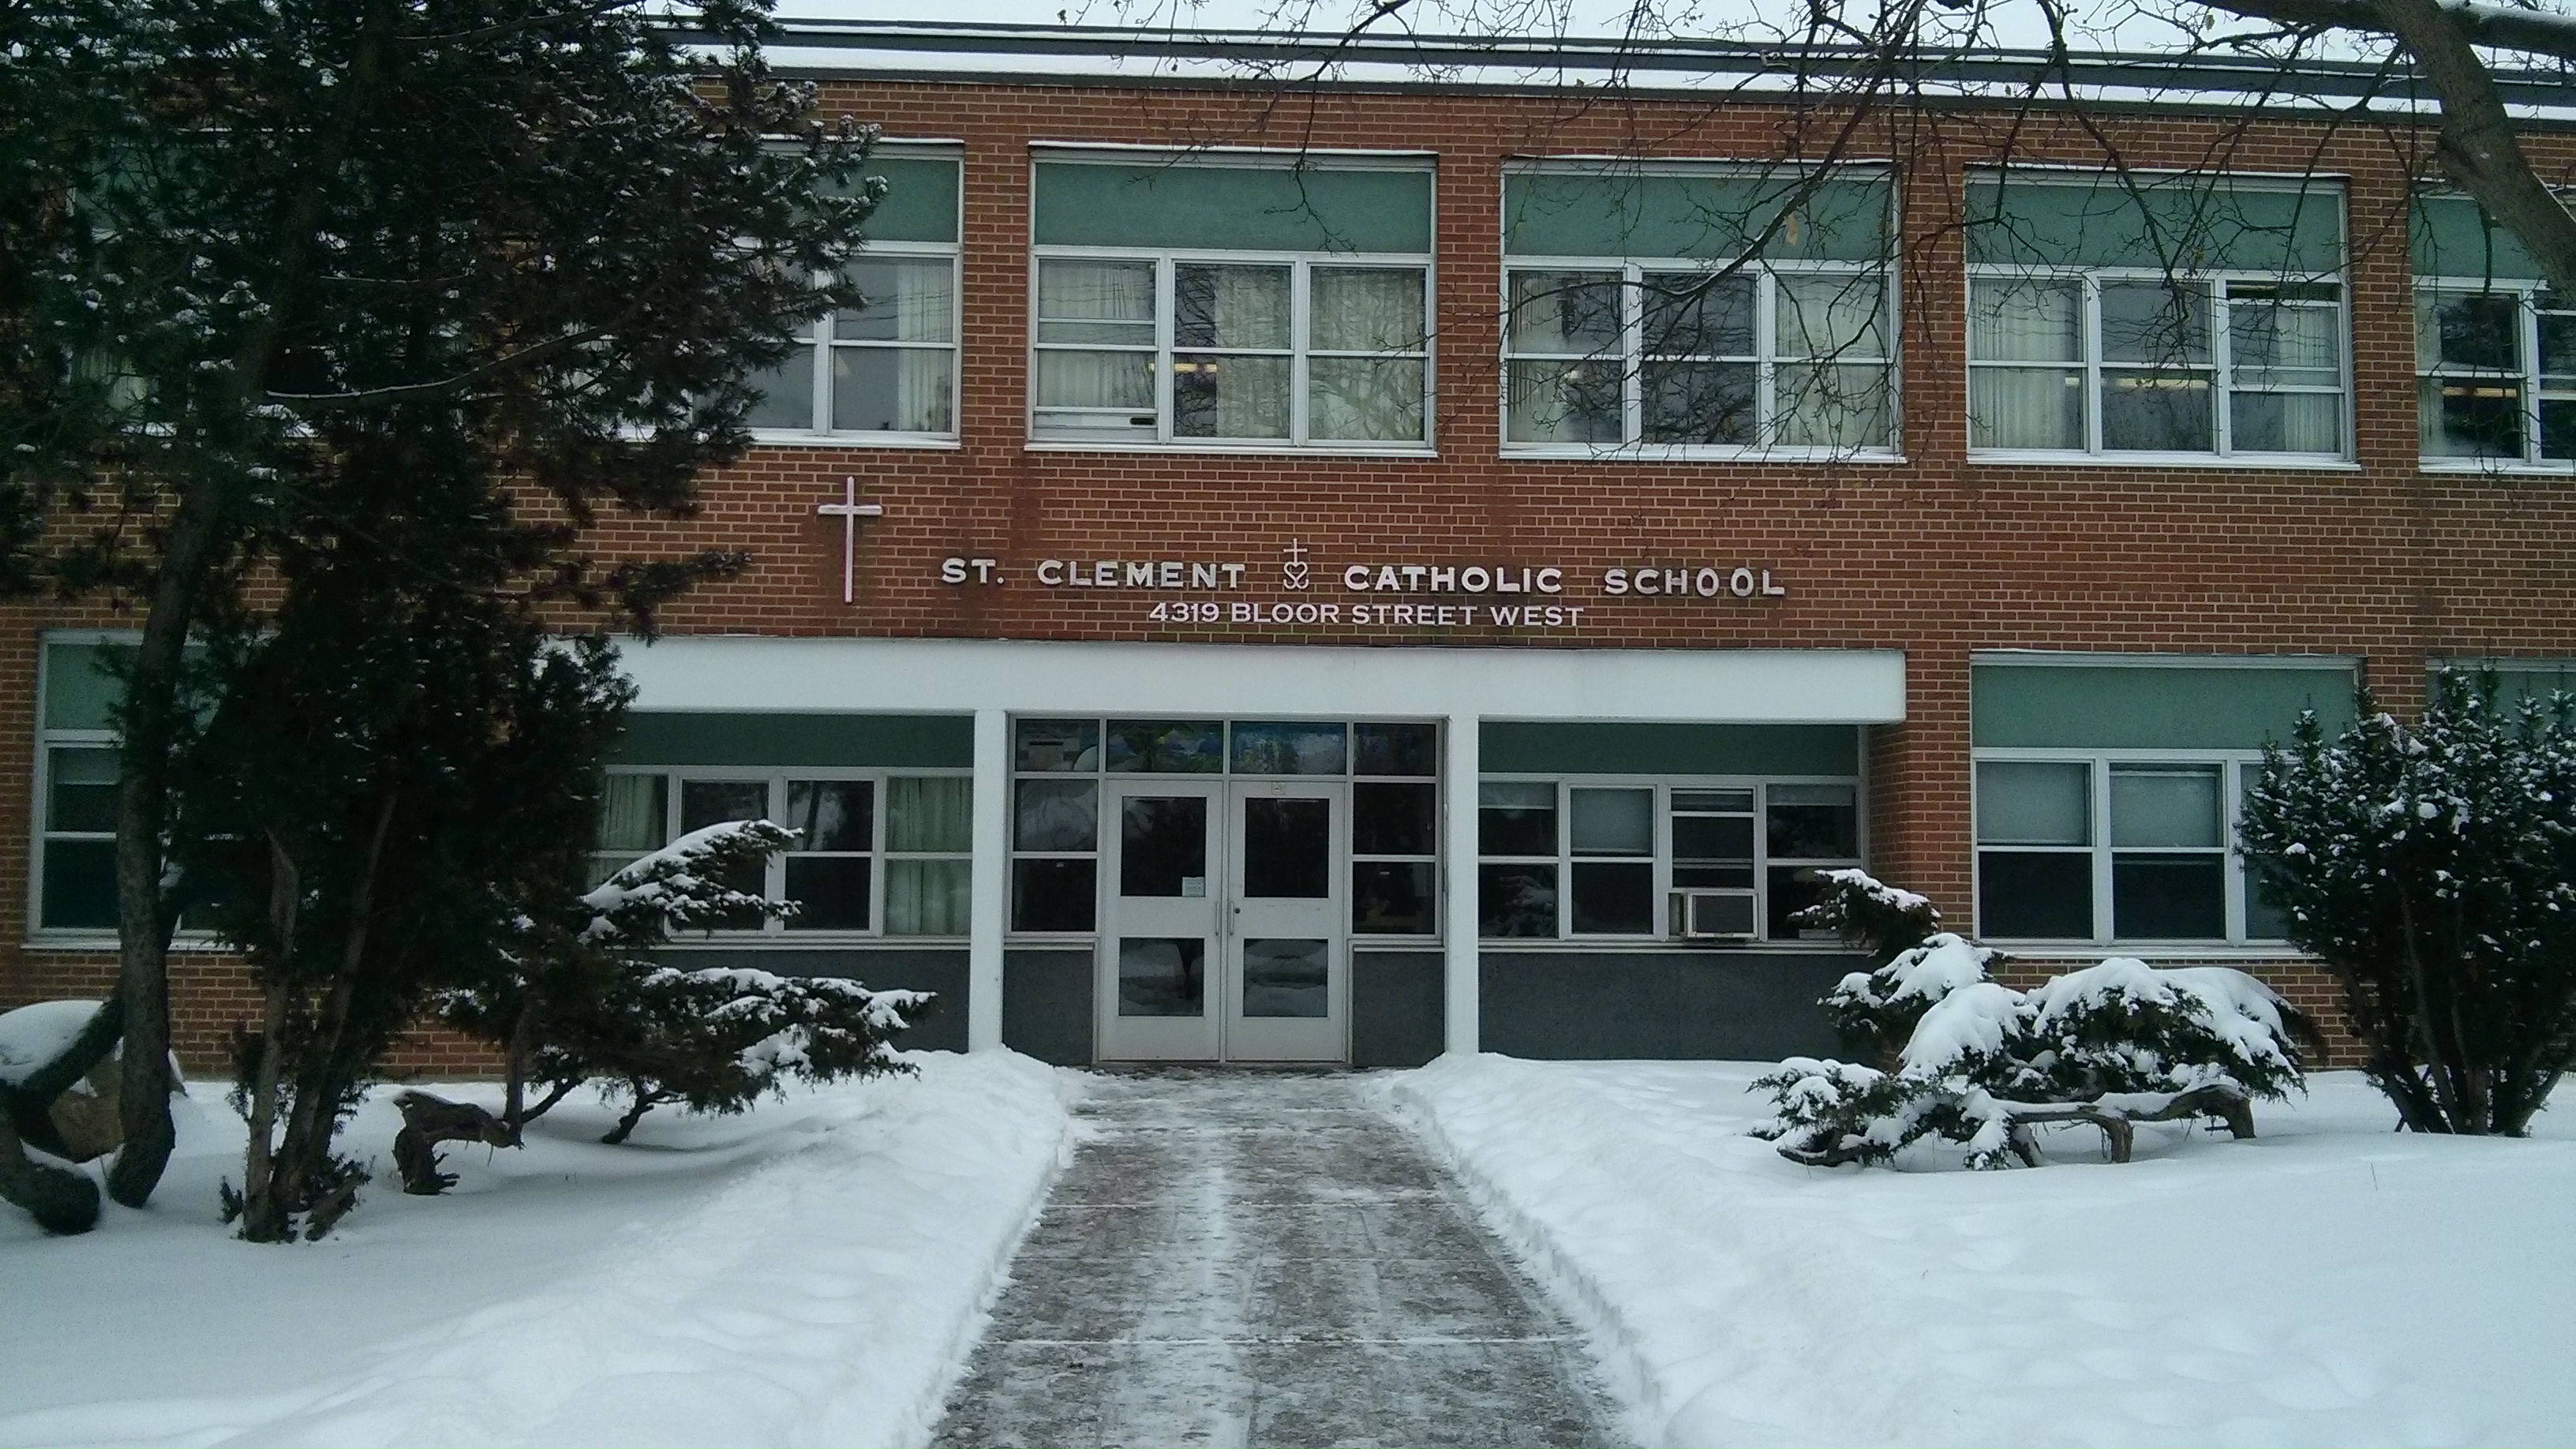 School Building Entrance in the snow